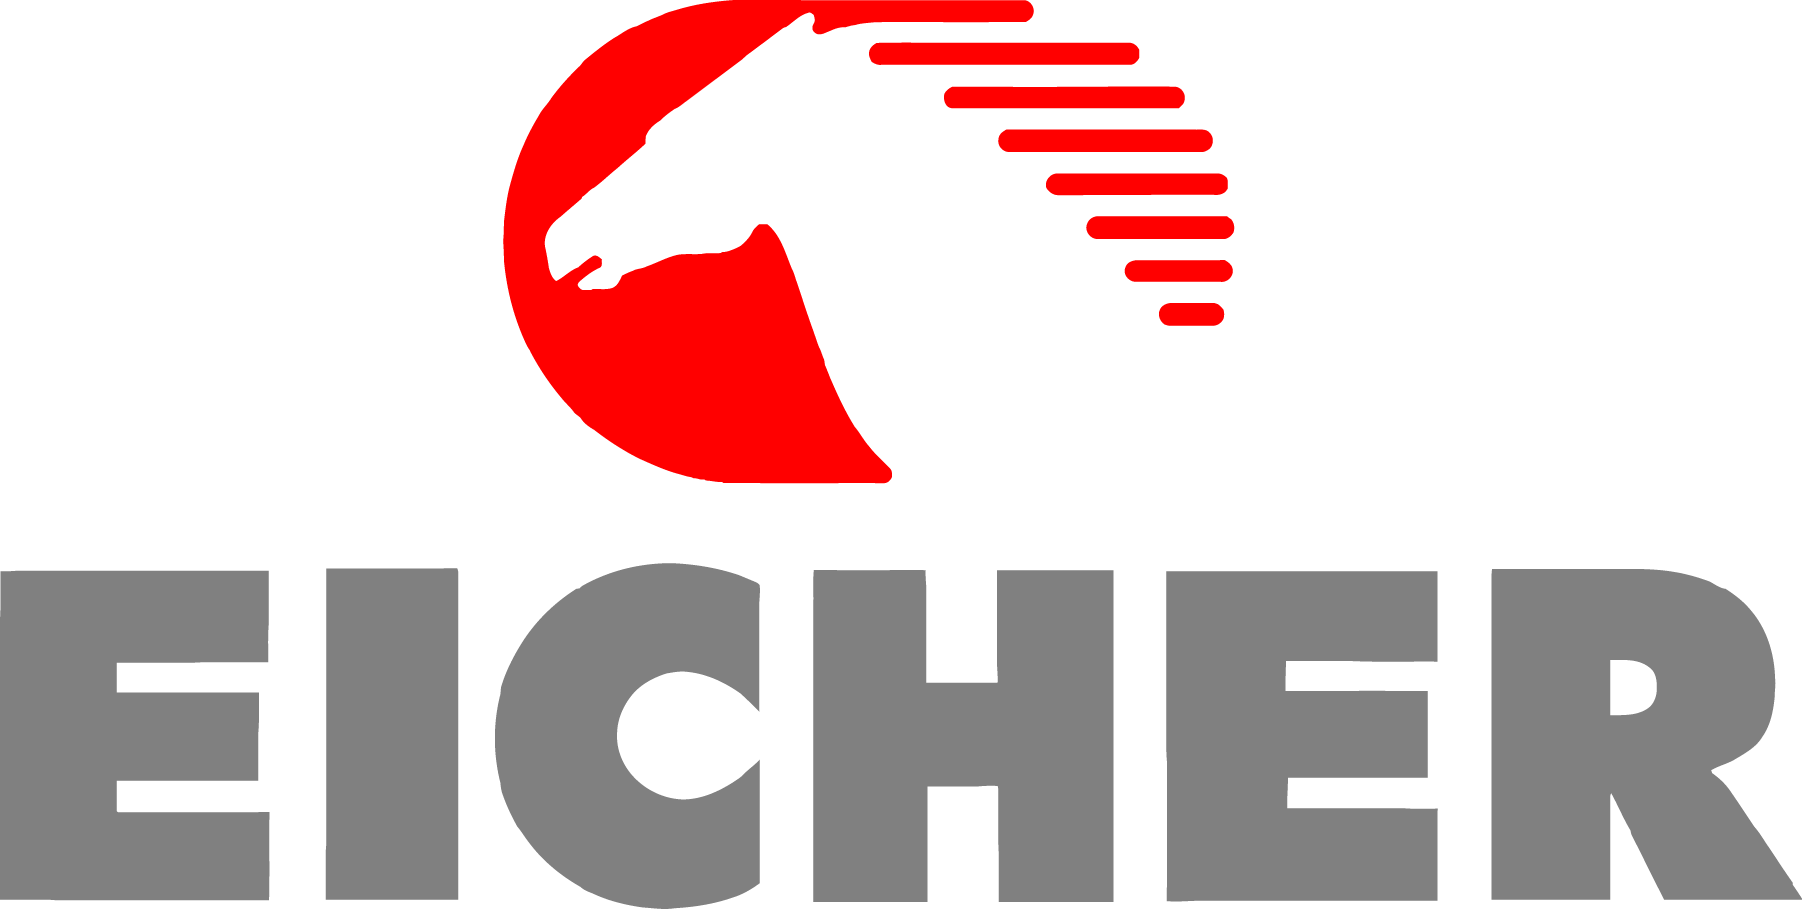 Eicher Motors Logo png